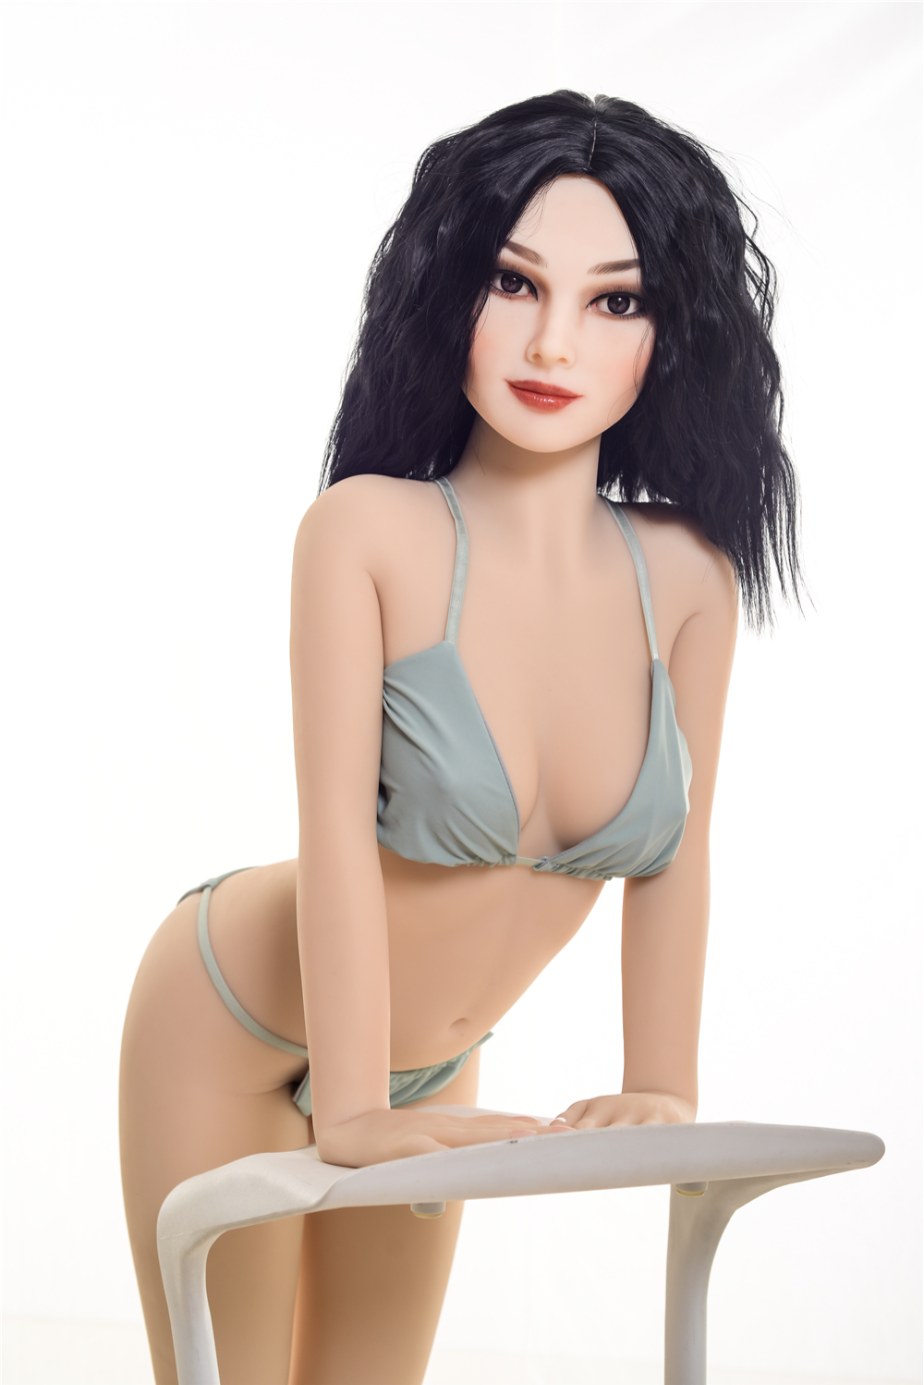 tamlyn 155cm black hair skinny flat chested tpe teen sex doll(11)